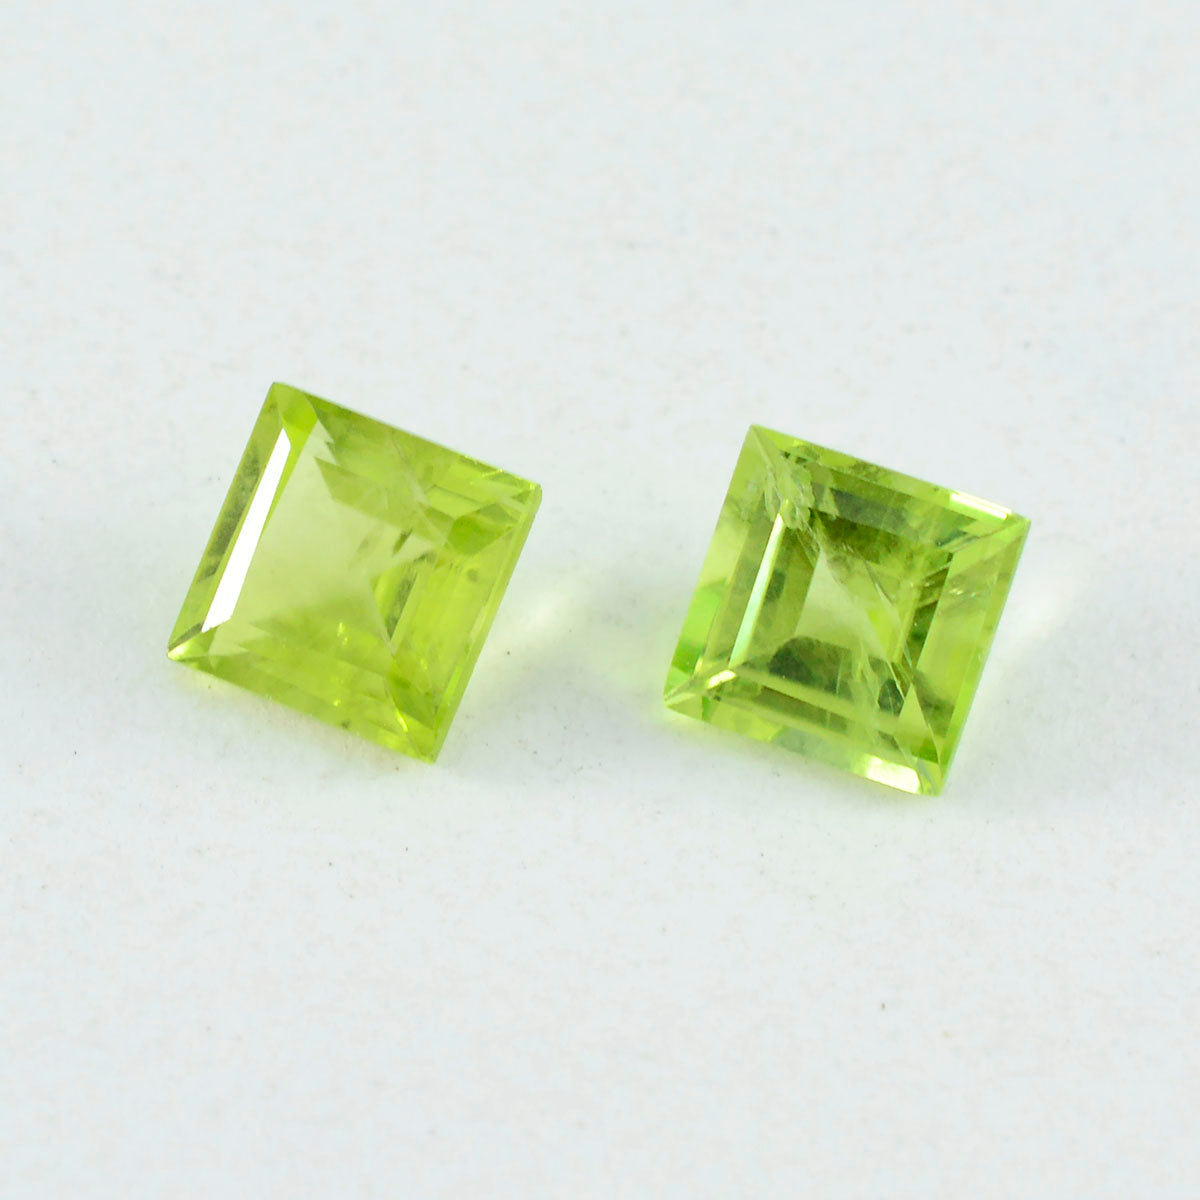 riyogems 1pc ナチュラル グリーン ペリドット ファセット 10x10 mm 正方形の形状のハンサムな品質のルース宝石